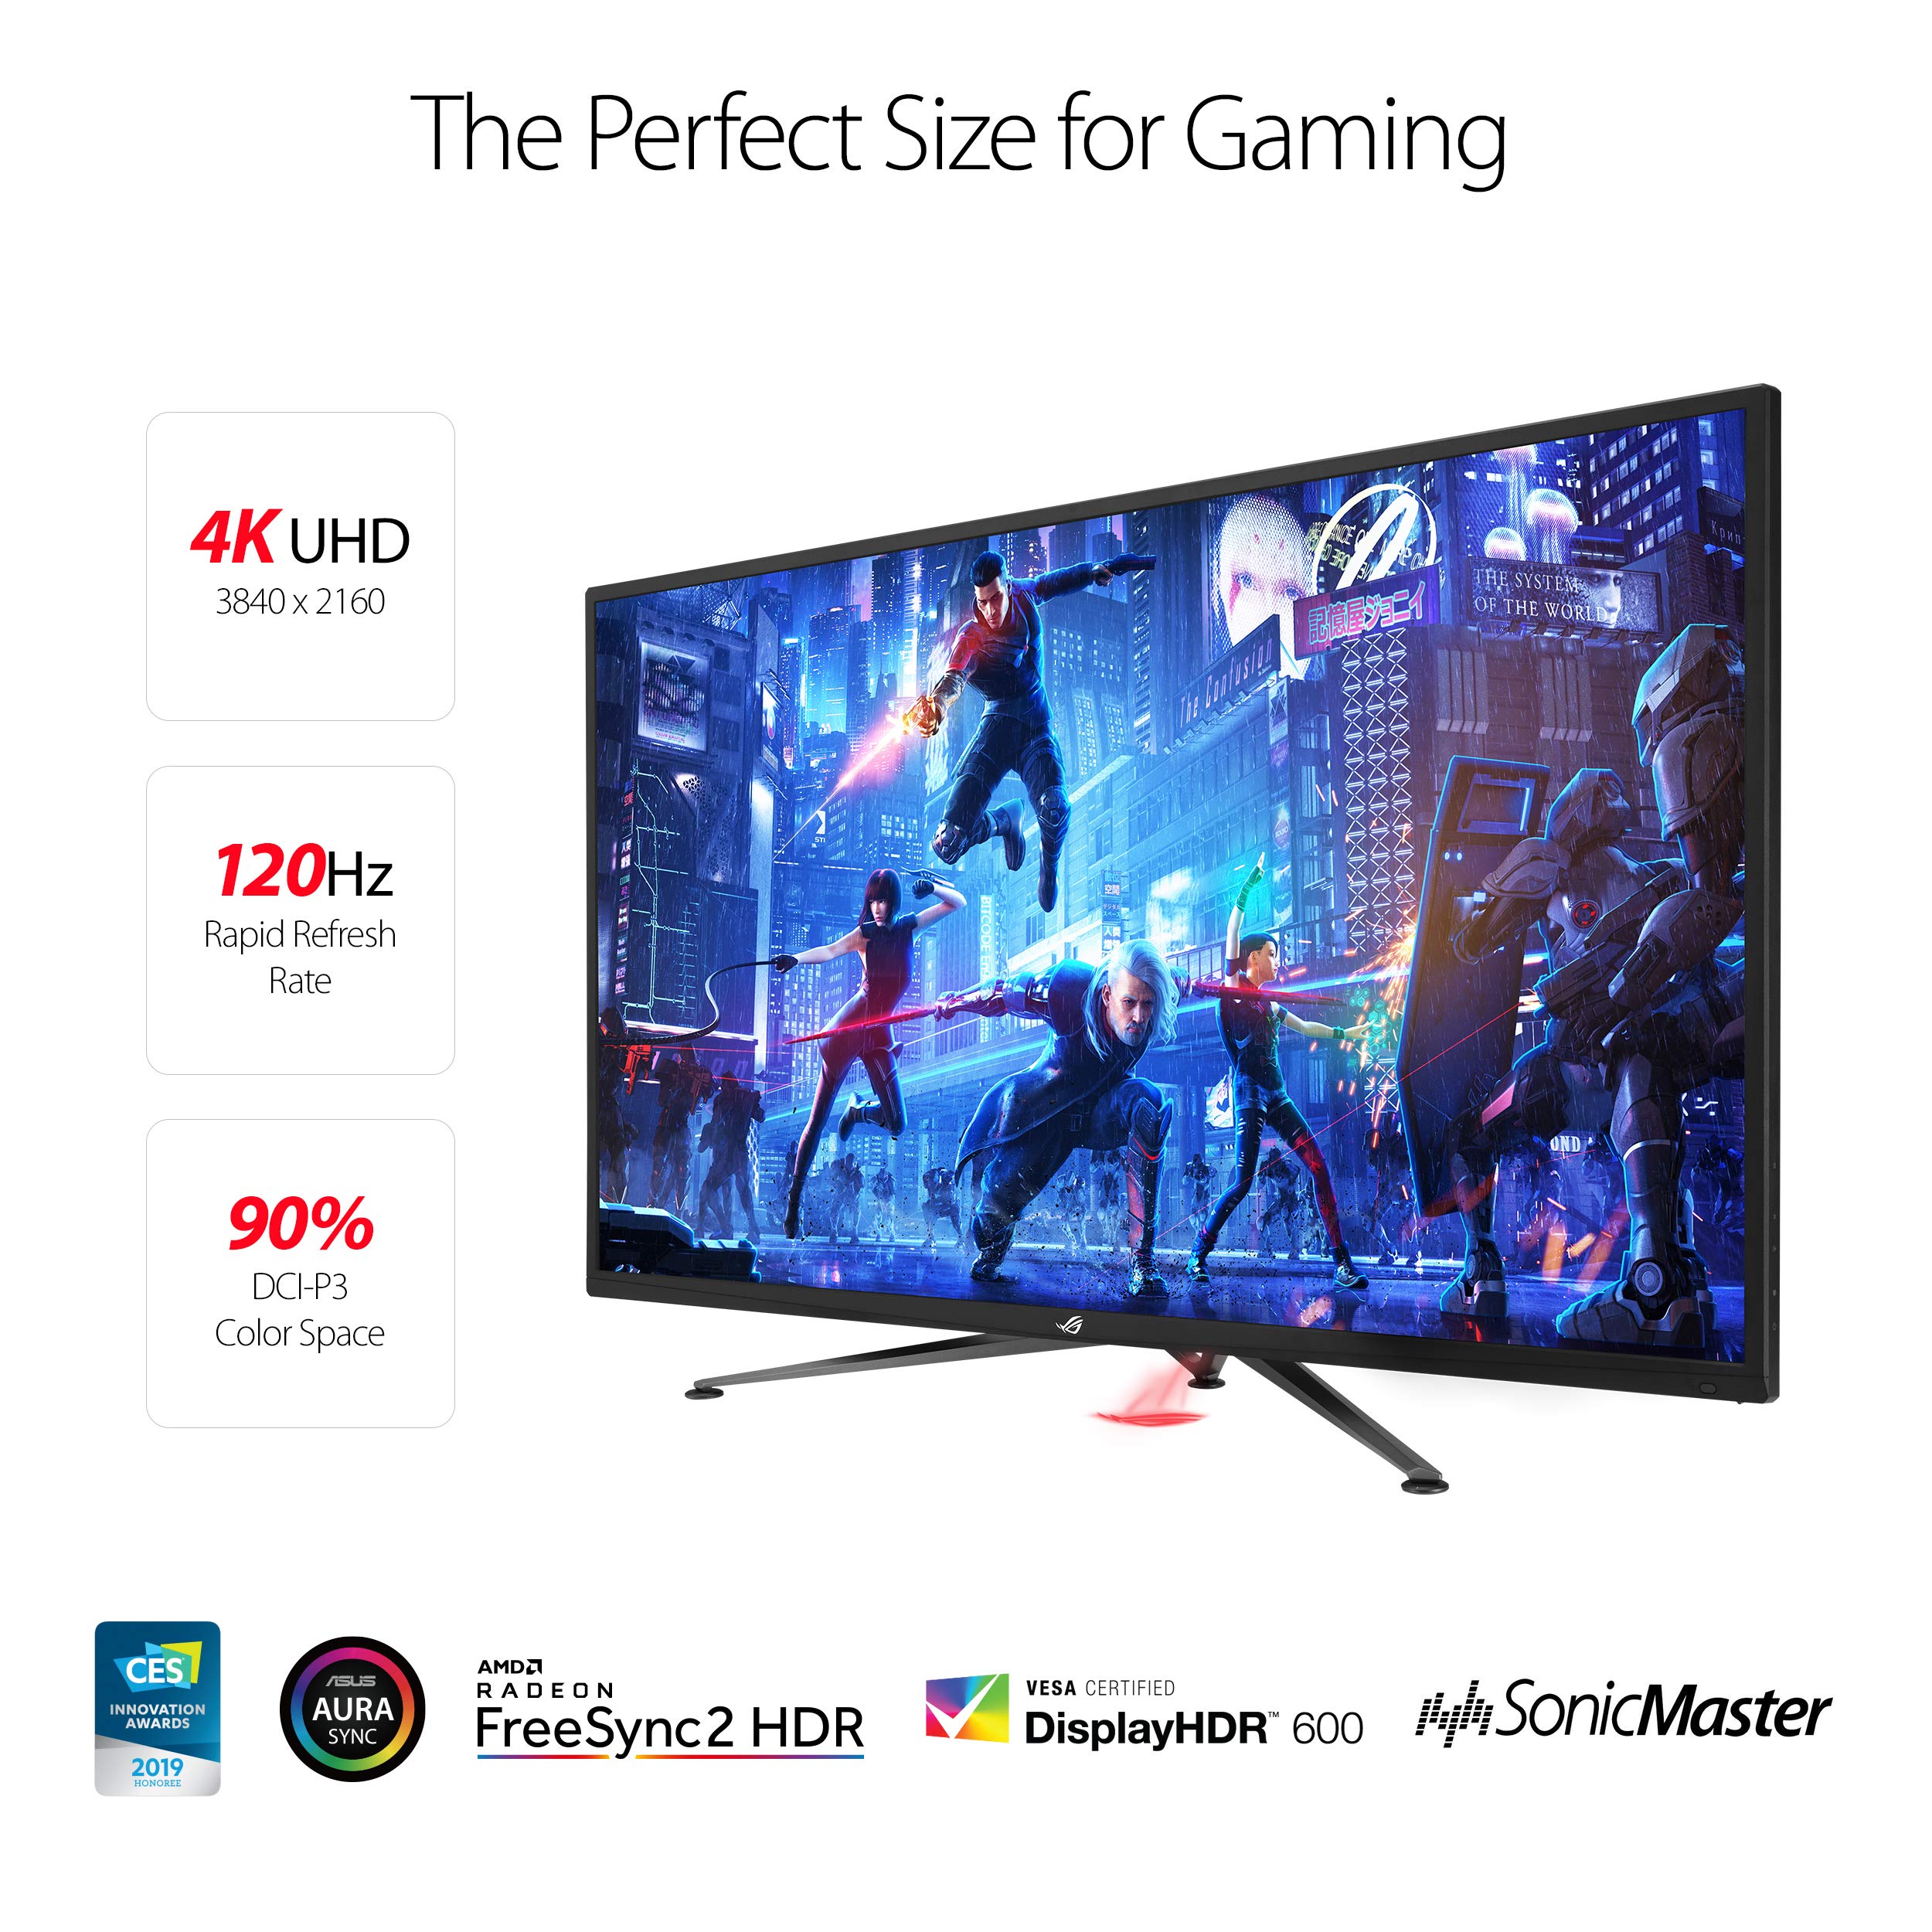 ASUS ROG Strix XG438Q 43” Gaming Monitor 4K 120Hz for $449